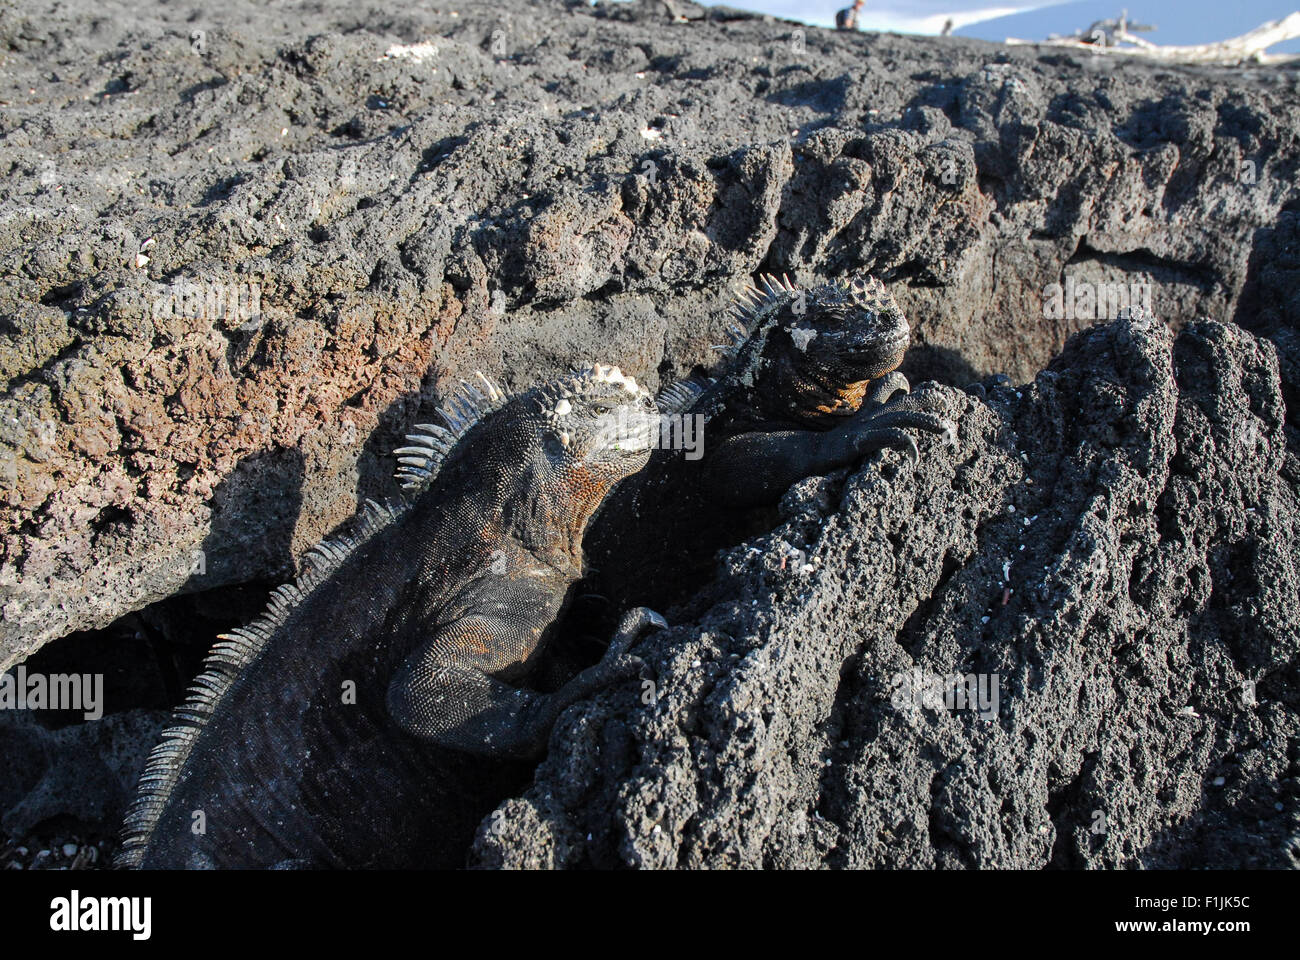 large-marine-iguanas-sunbathing-on-rough-lava-rocks-galapagos-islands-F1JK5C.jpg